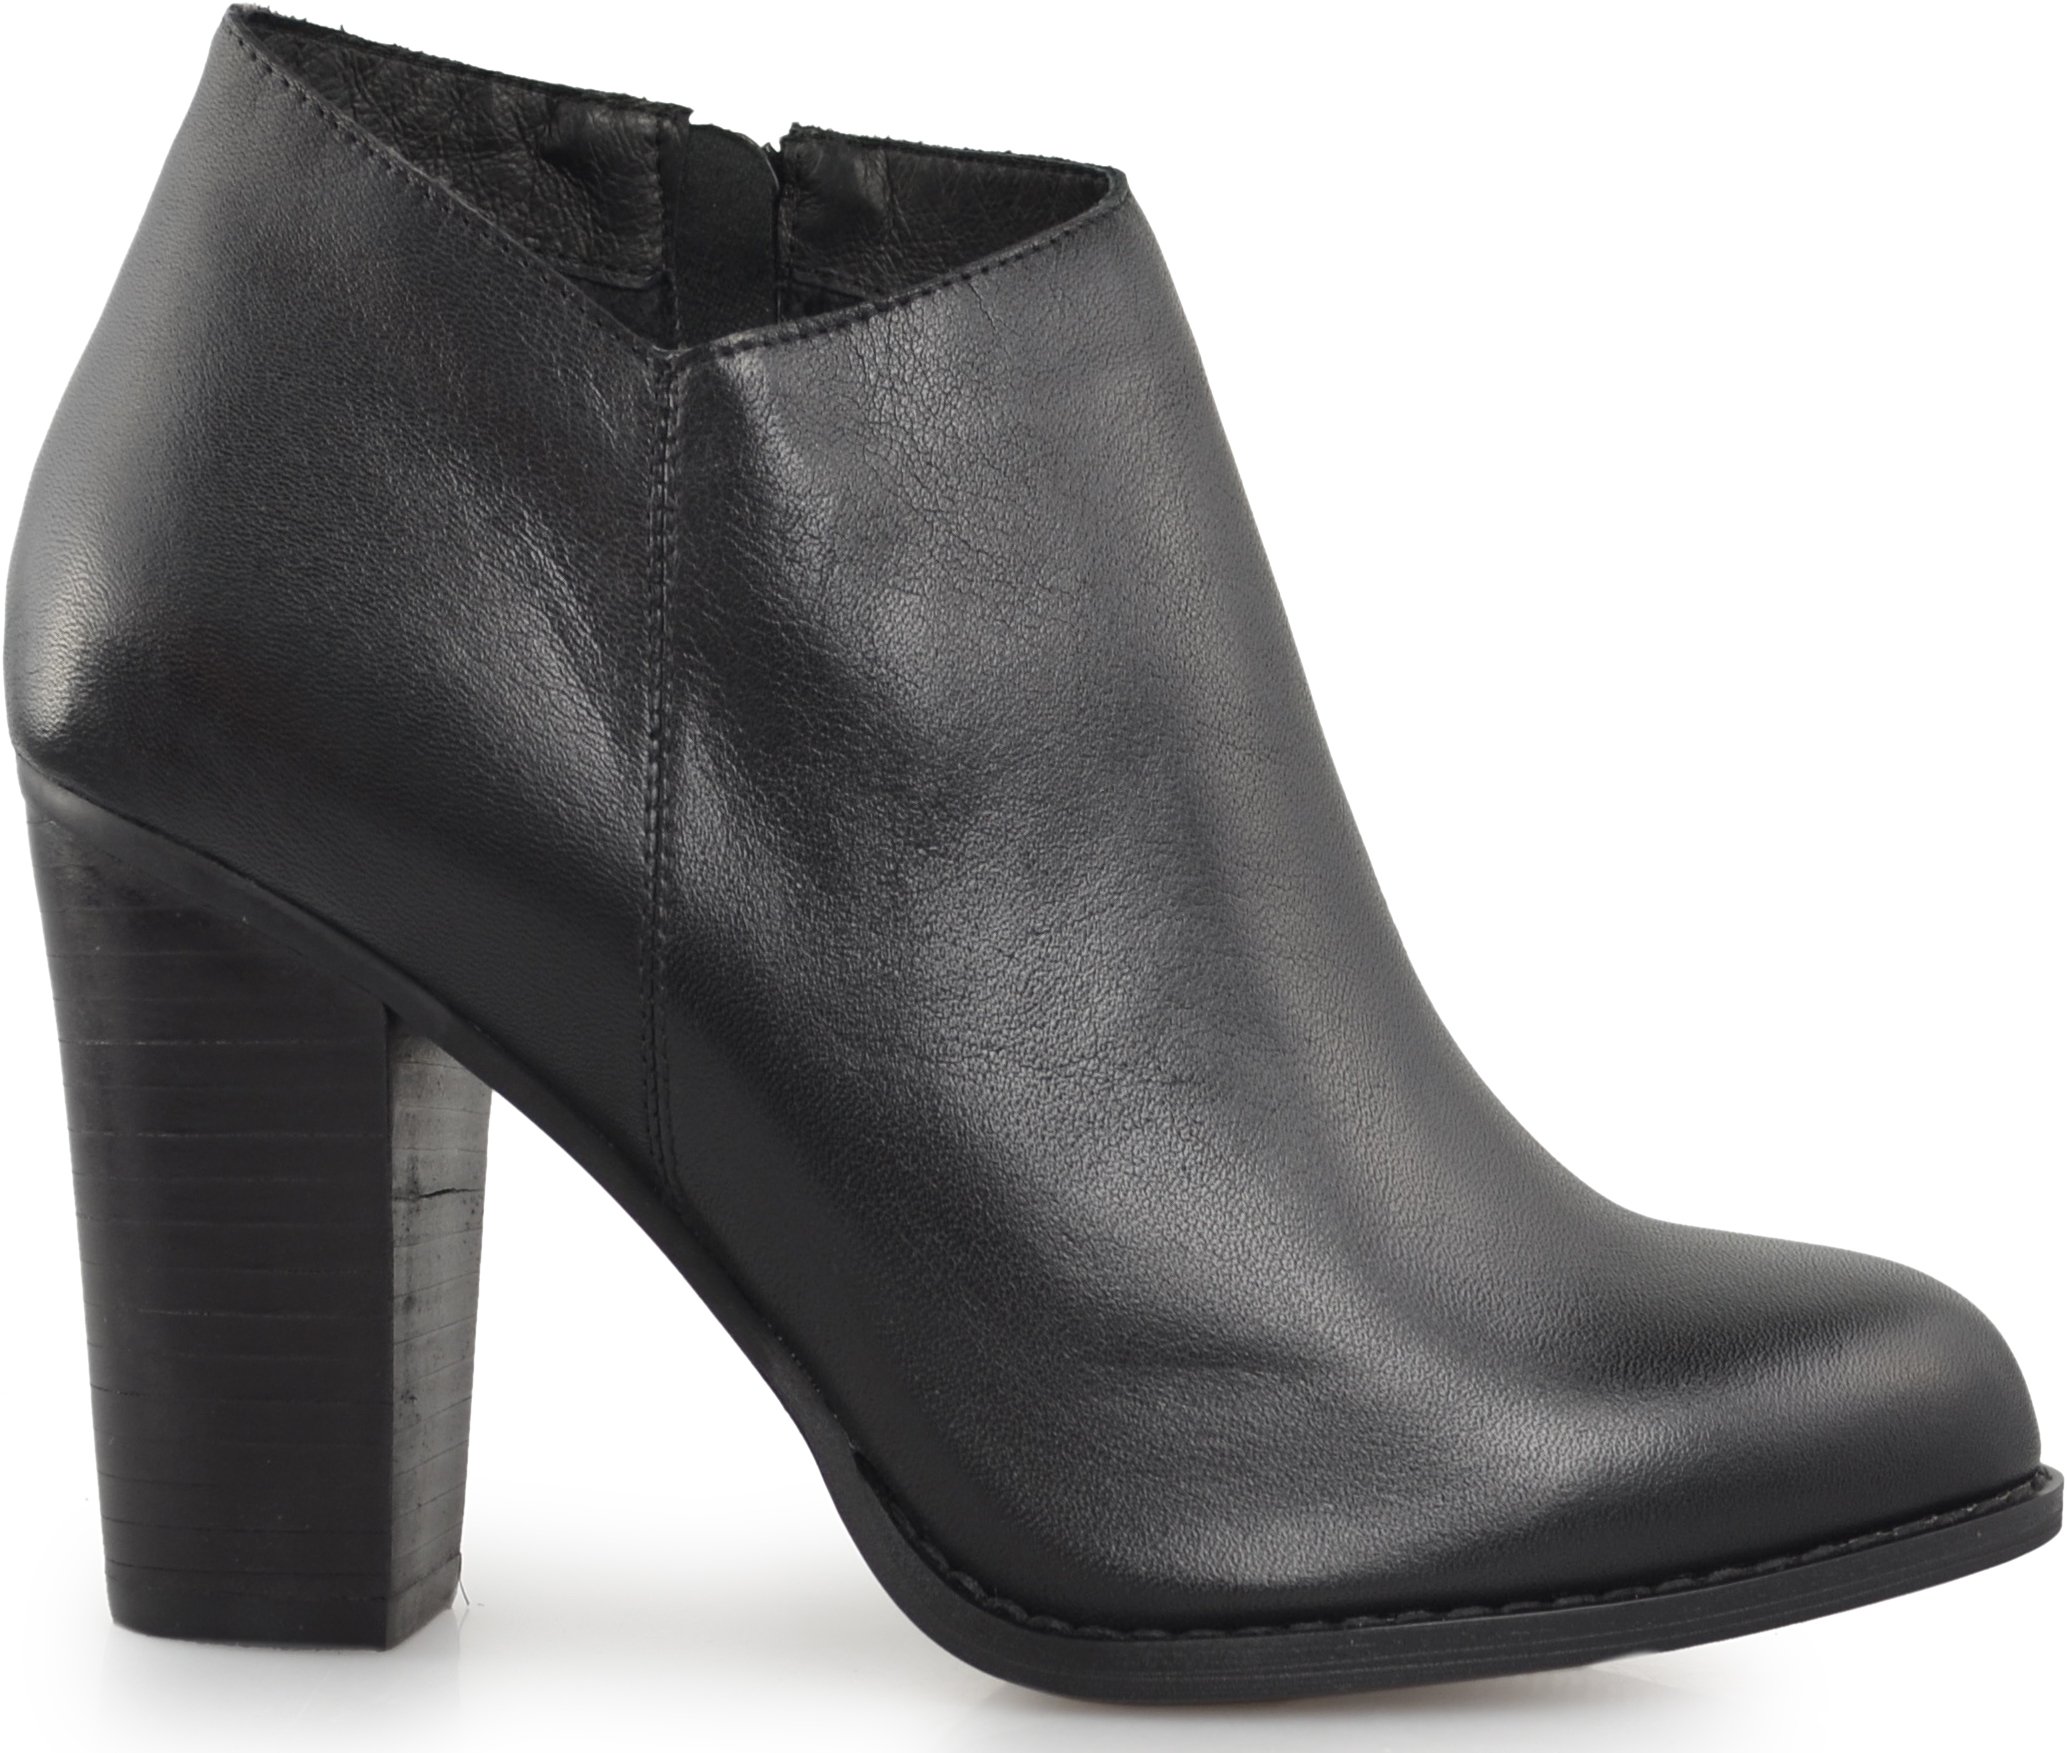 AMAL-BLACK - Traffic Footwear Women Shoes Collection - Boston Babe ...